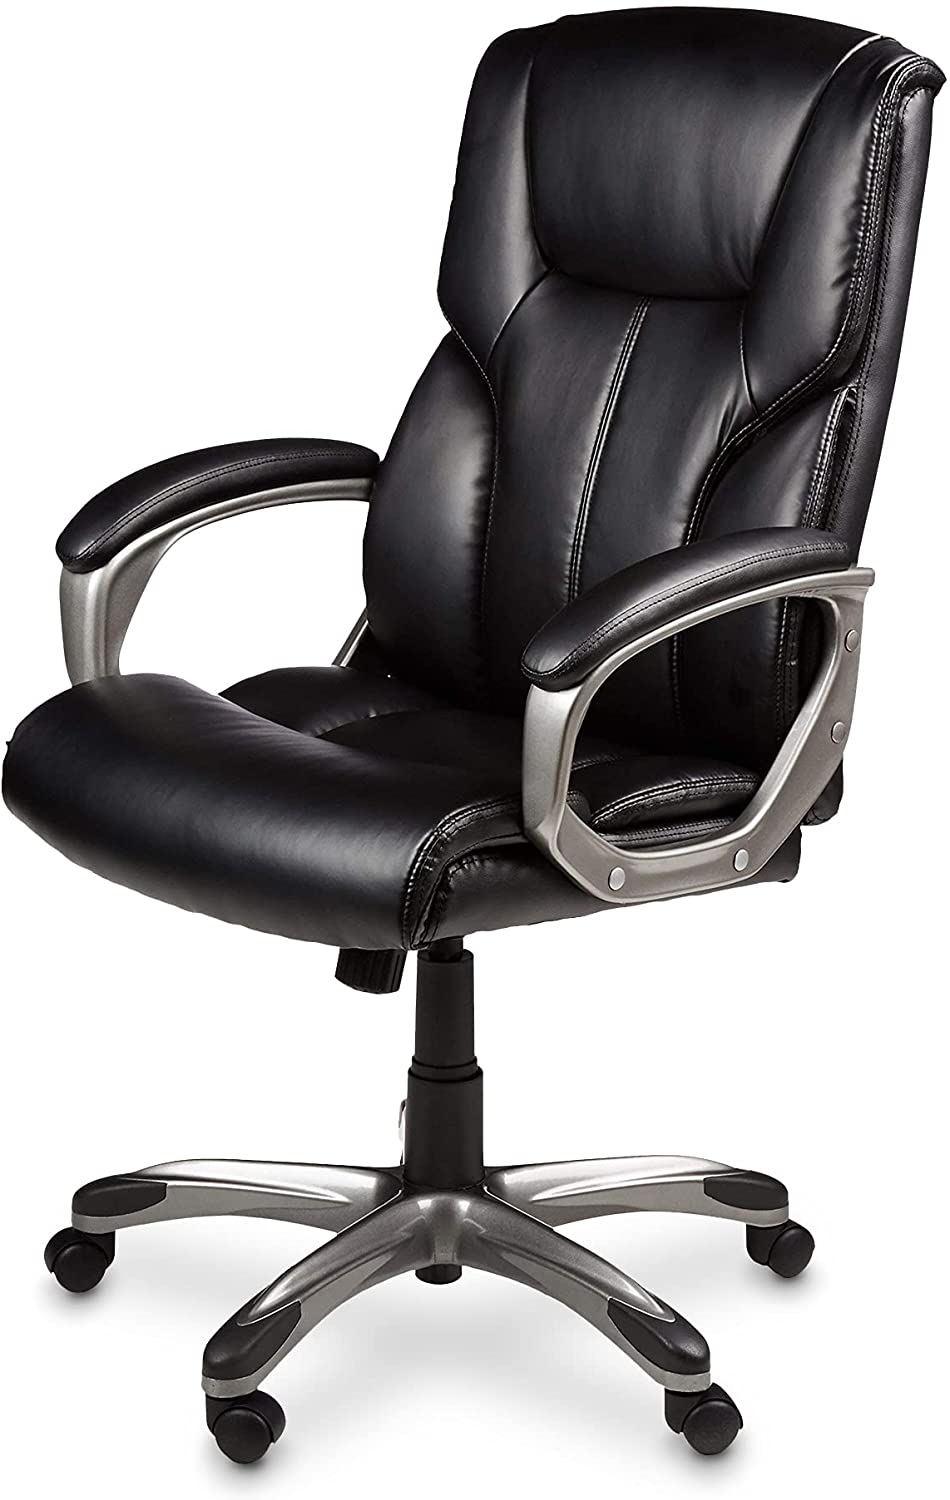 Amazon Basics Executive Office Desk Chair Best Affordable Desk Chair 